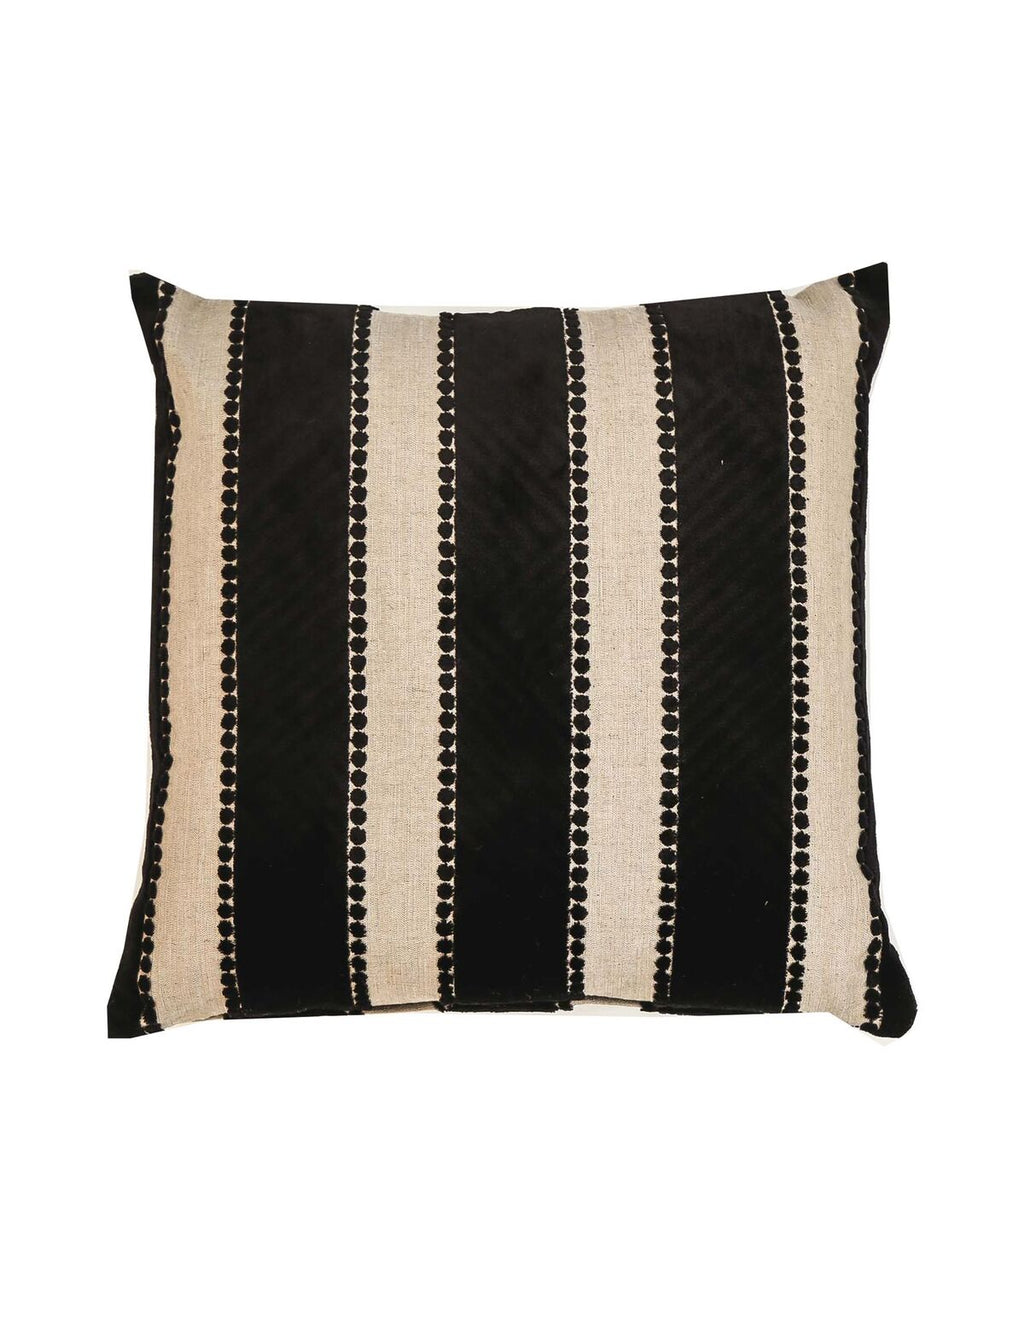 Signature Striped Black and White Cushion